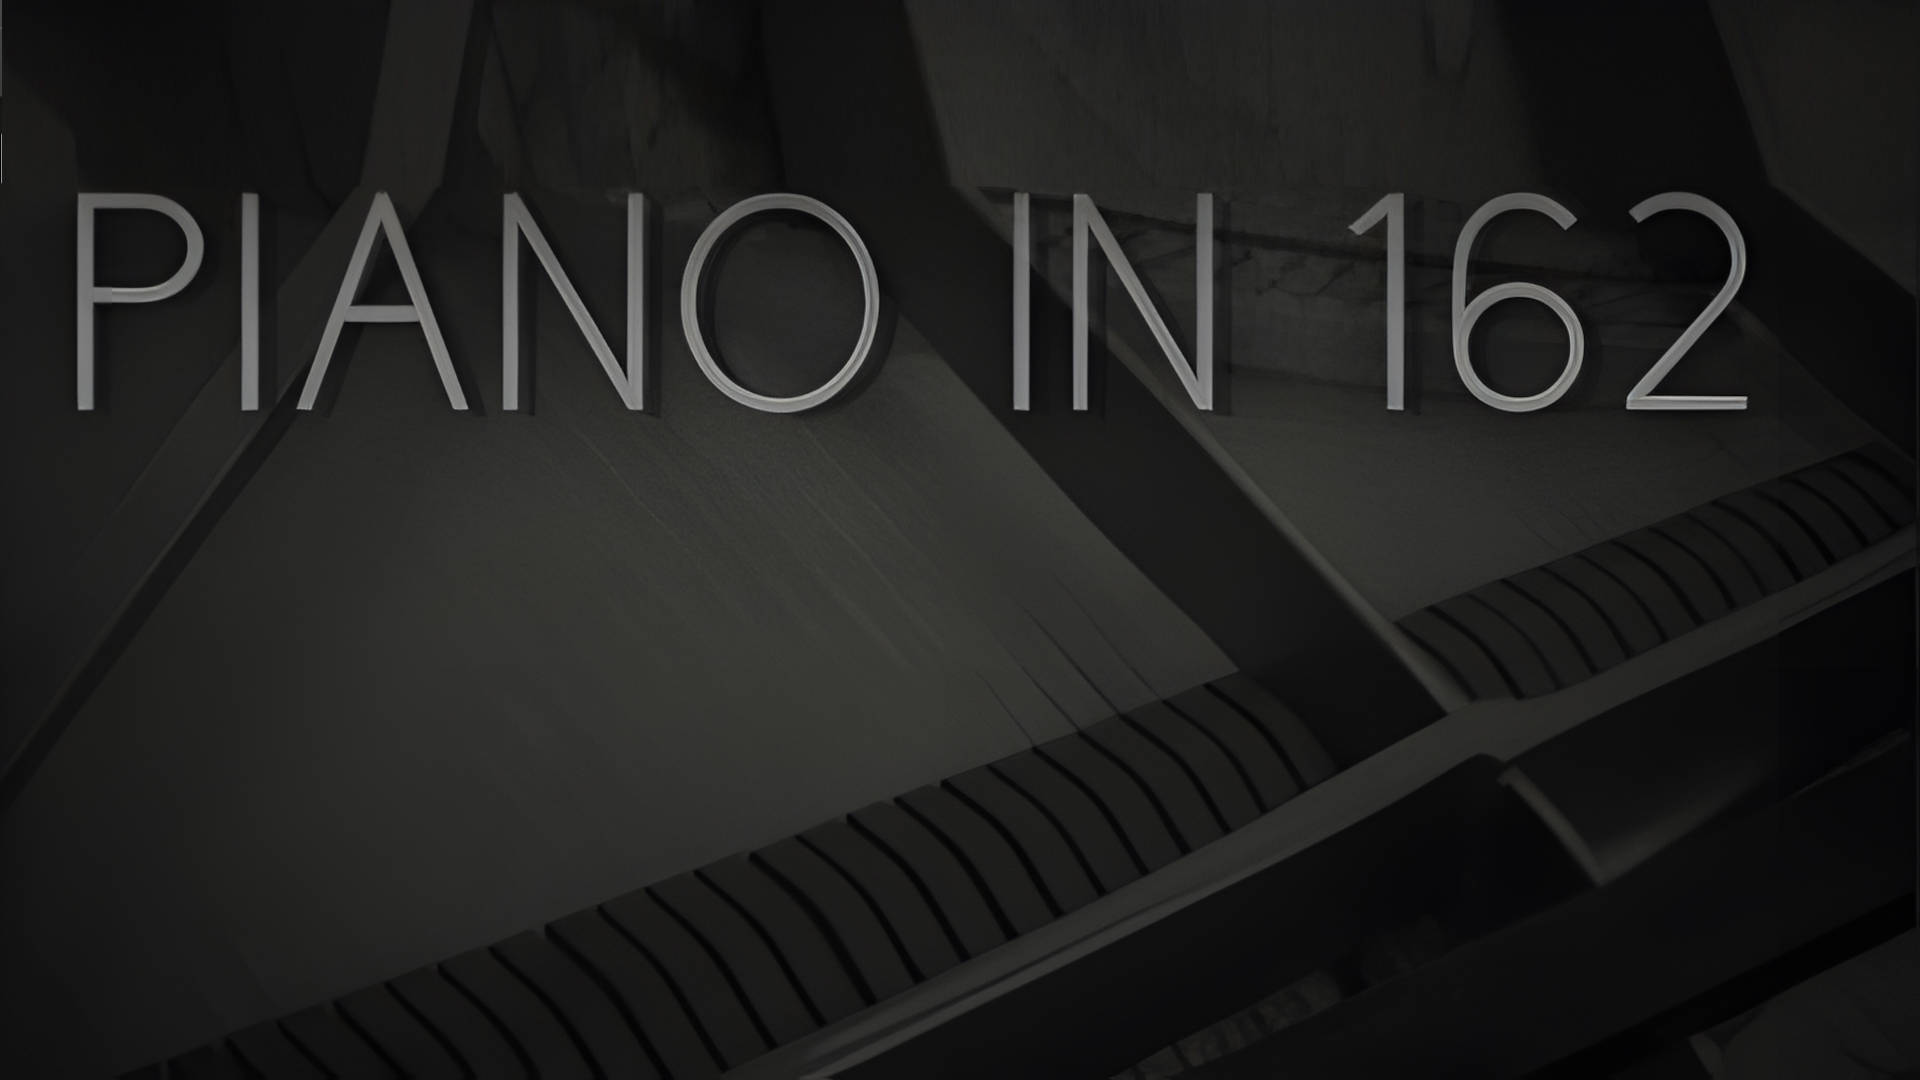 Piano in 162